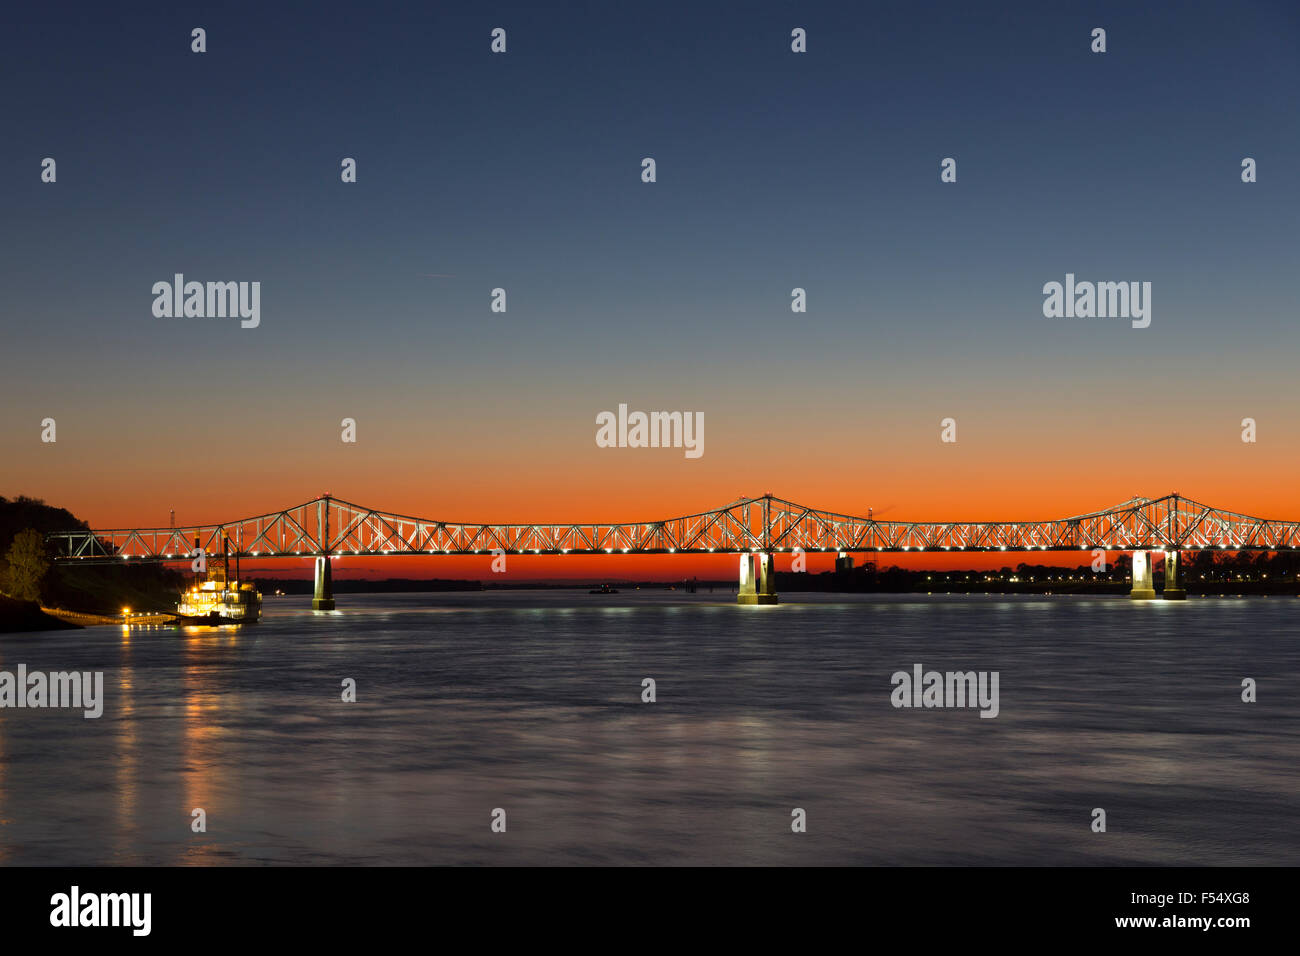 Nachtszene beleuchtete Eisen Freischwinger Natchez - Vidalia Brücke Brücke über dem Mississippi Fluß in Louisiana, USA Stockfoto